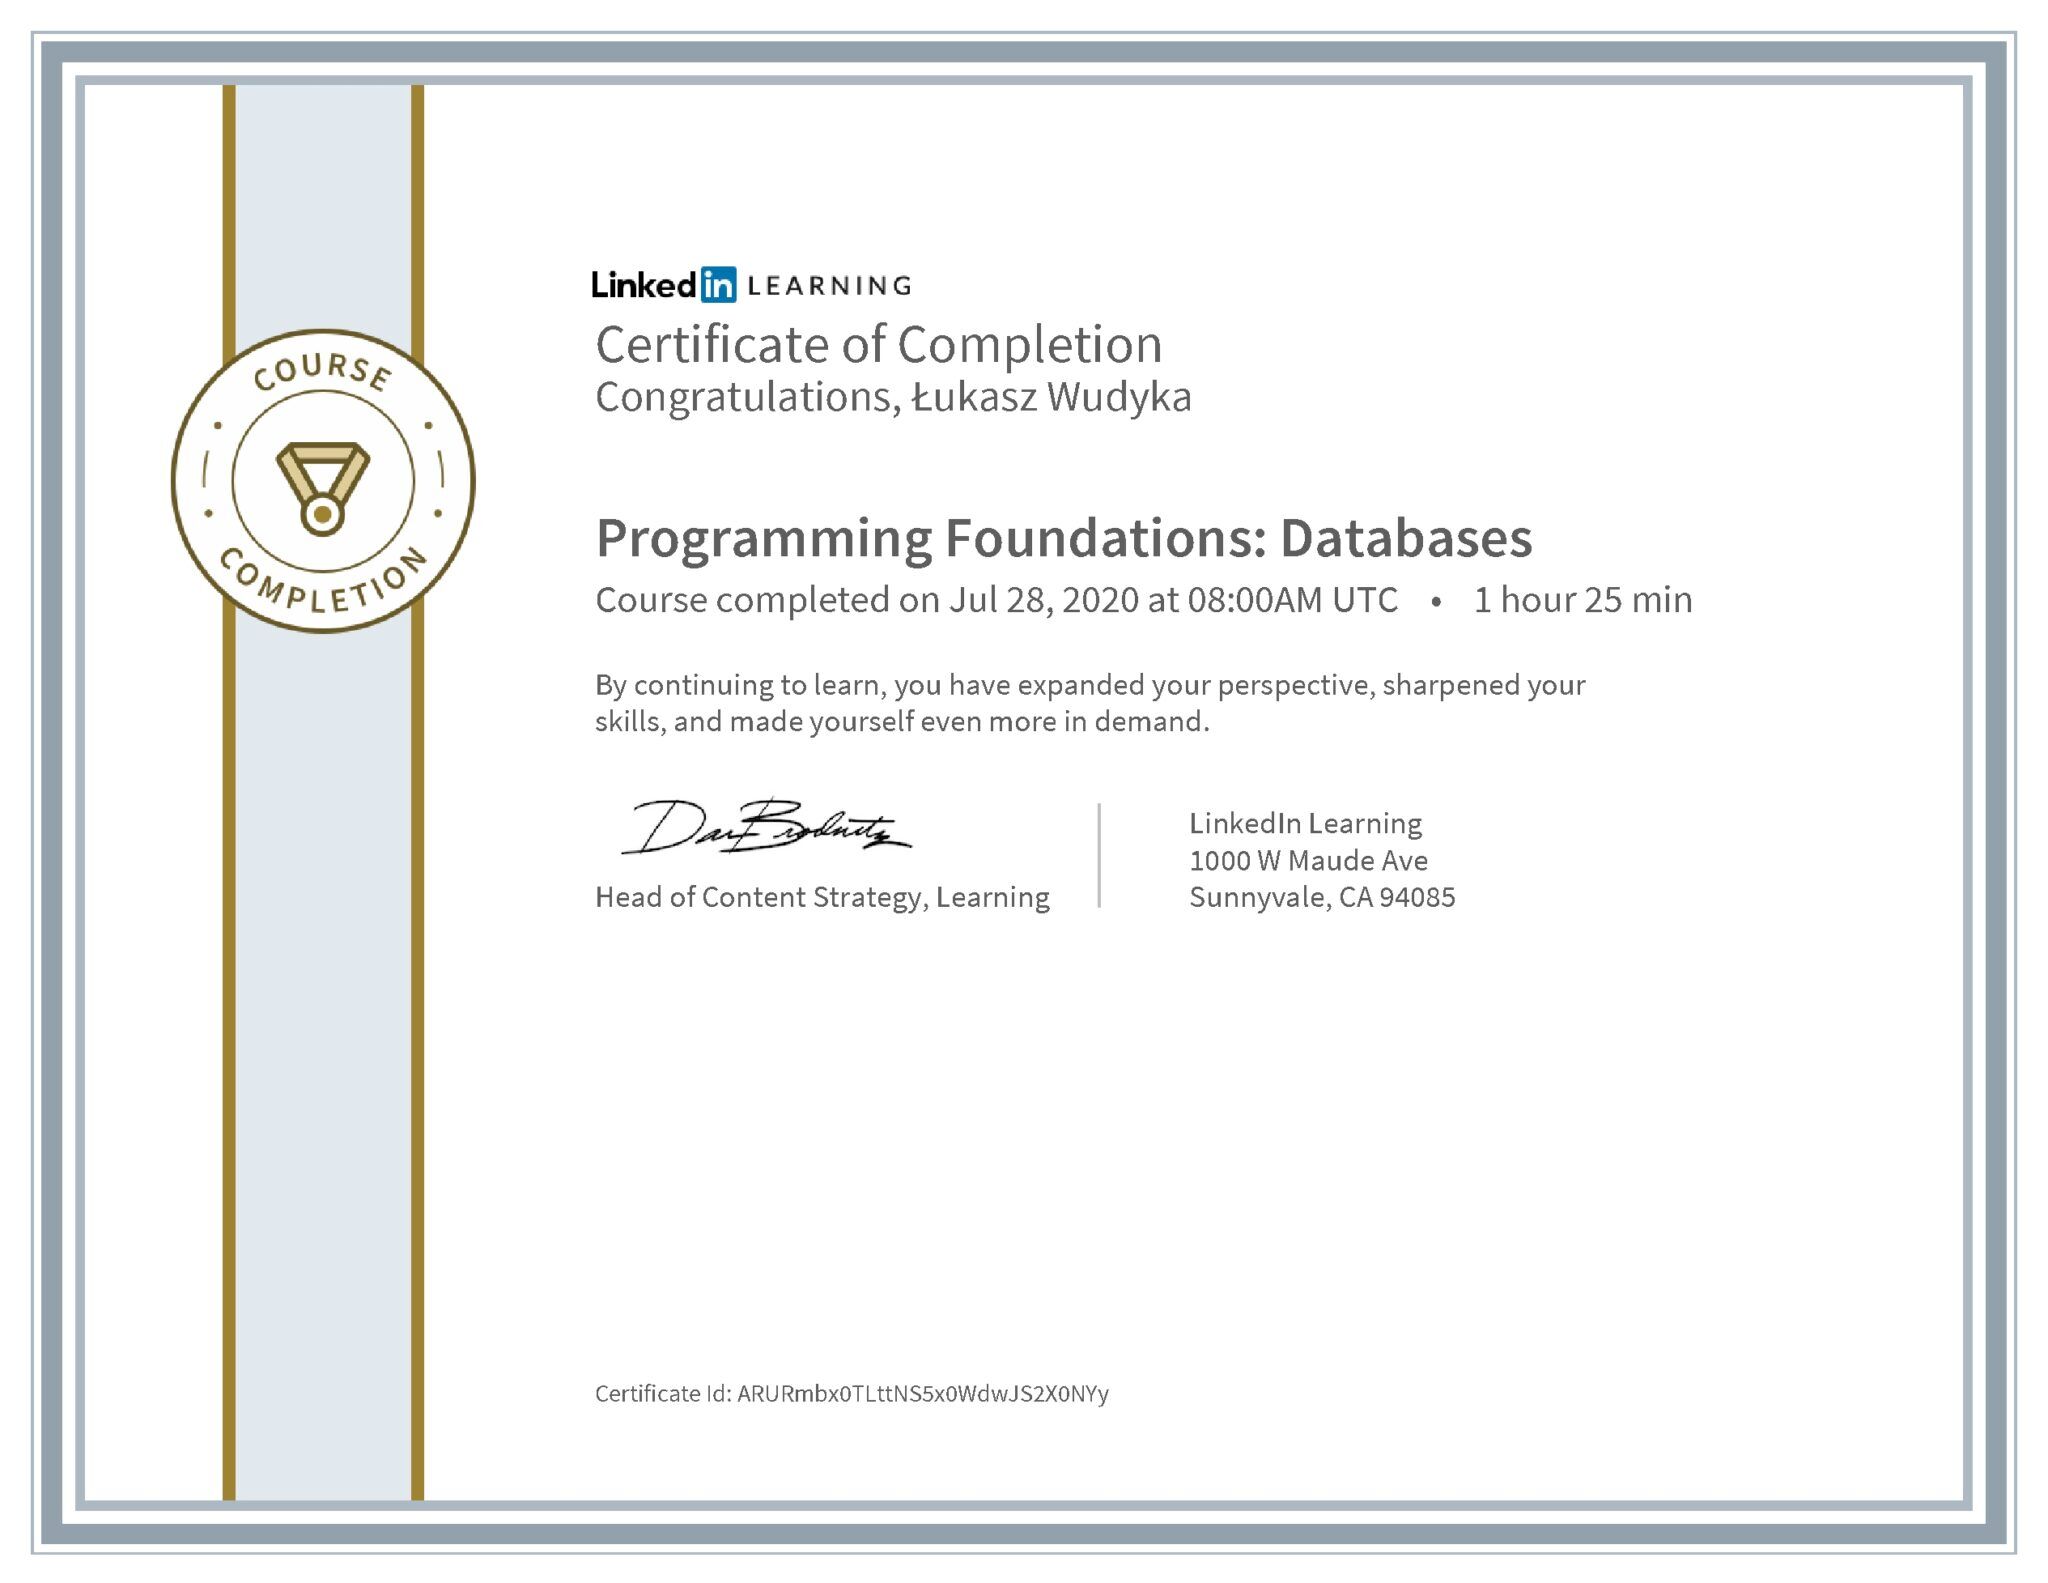 Łukasz Wudyka certyfikat LinkedIn Programming Foundations: Databases